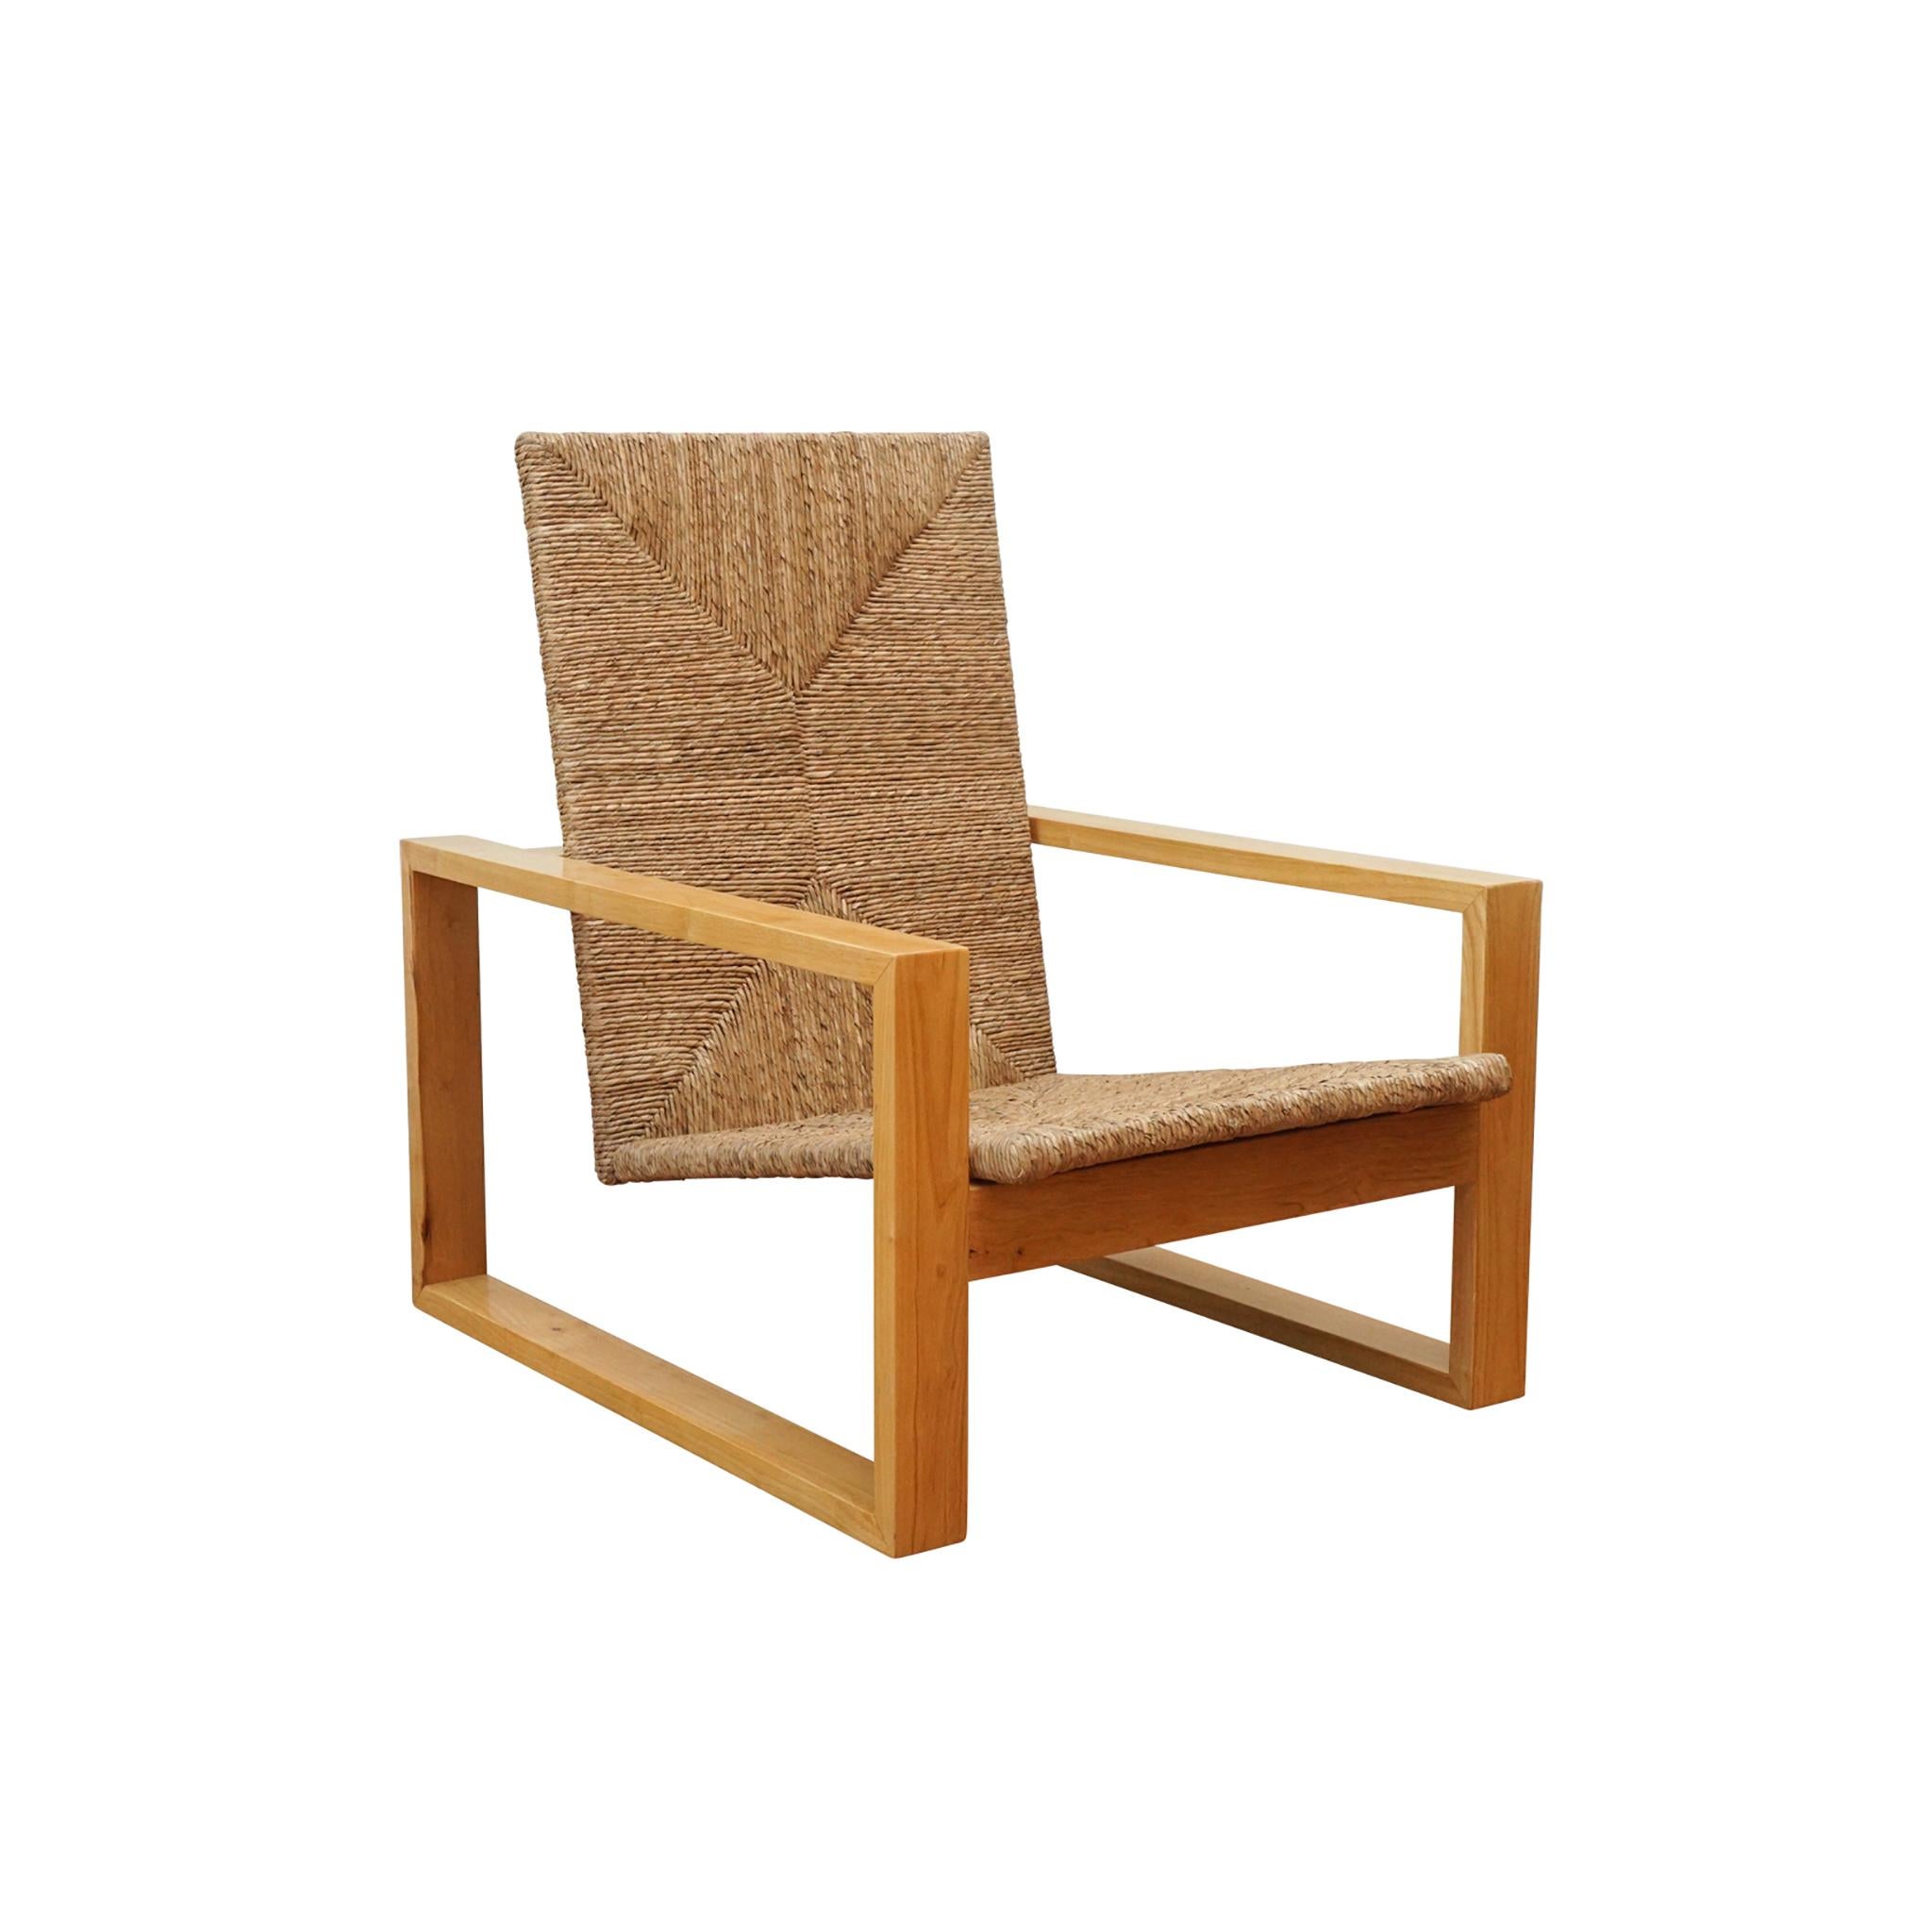 Machine-Made Wood and braided abaca chair 